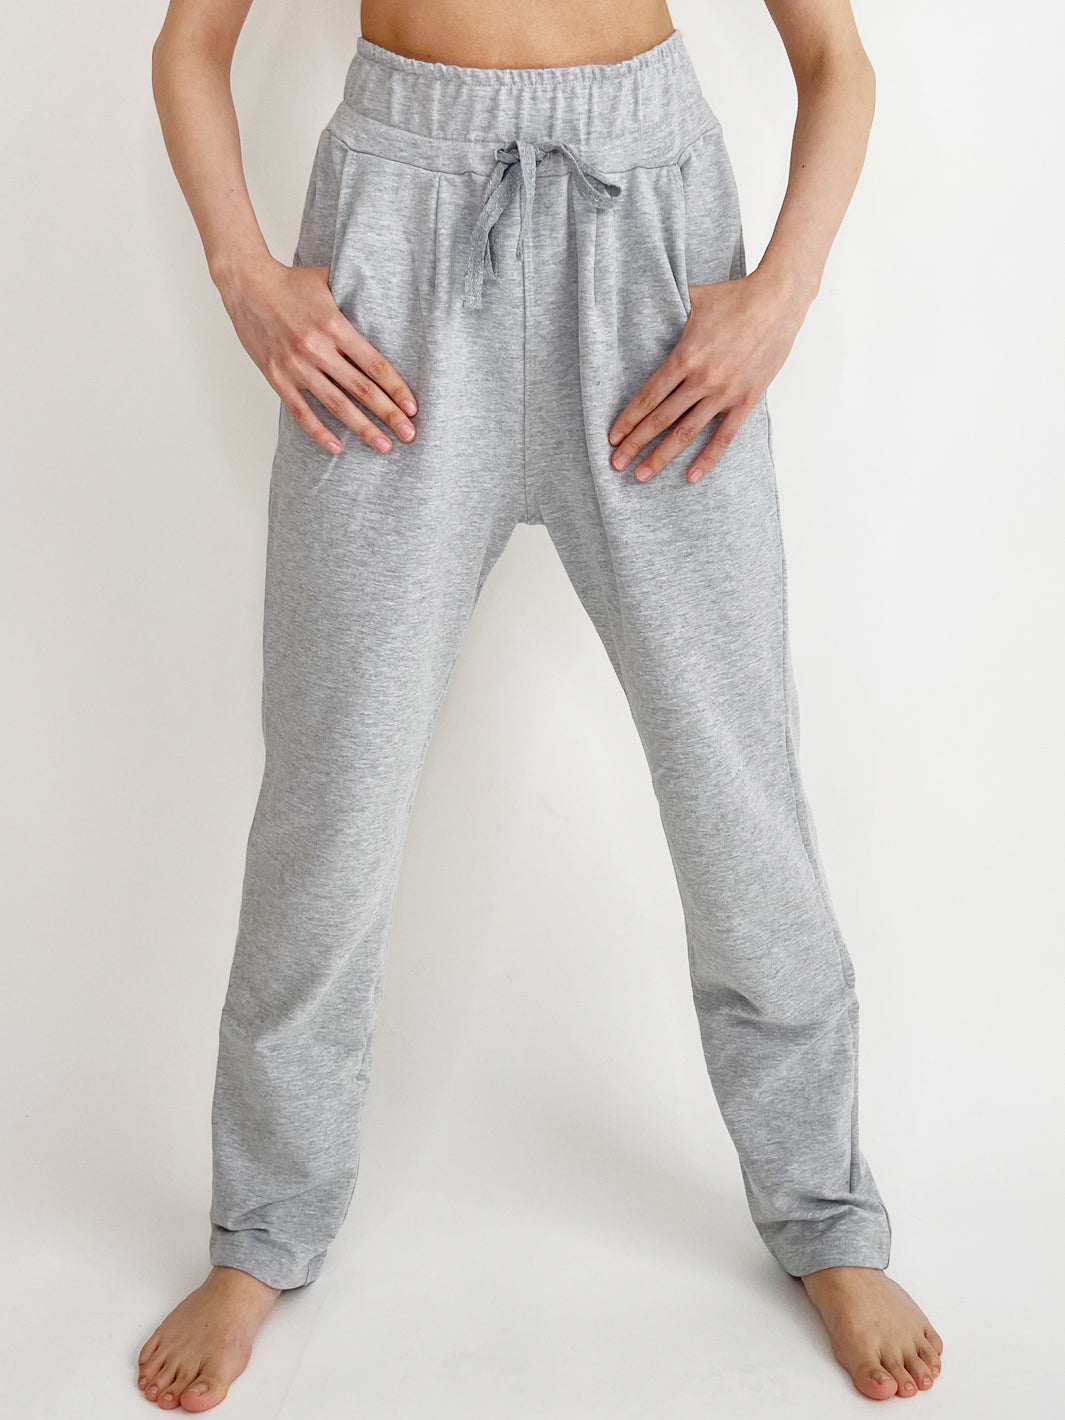 cocoi-pantalon-london-gris-ropa-yoga-mujer